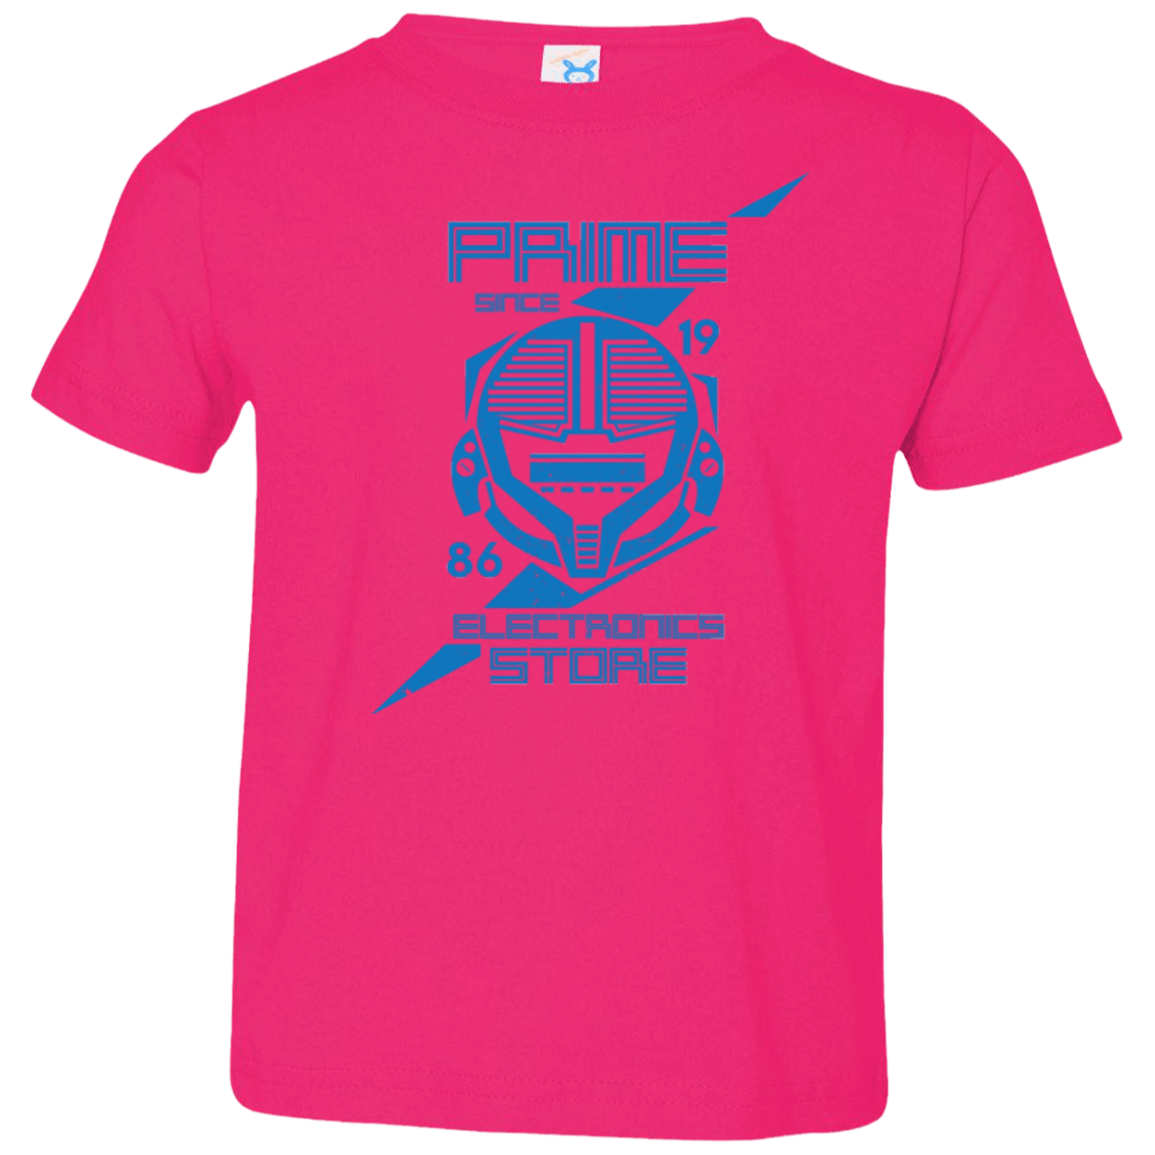 T-Shirts Hot Pink / 2T Prime electronics Toddler Premium T-Shirt